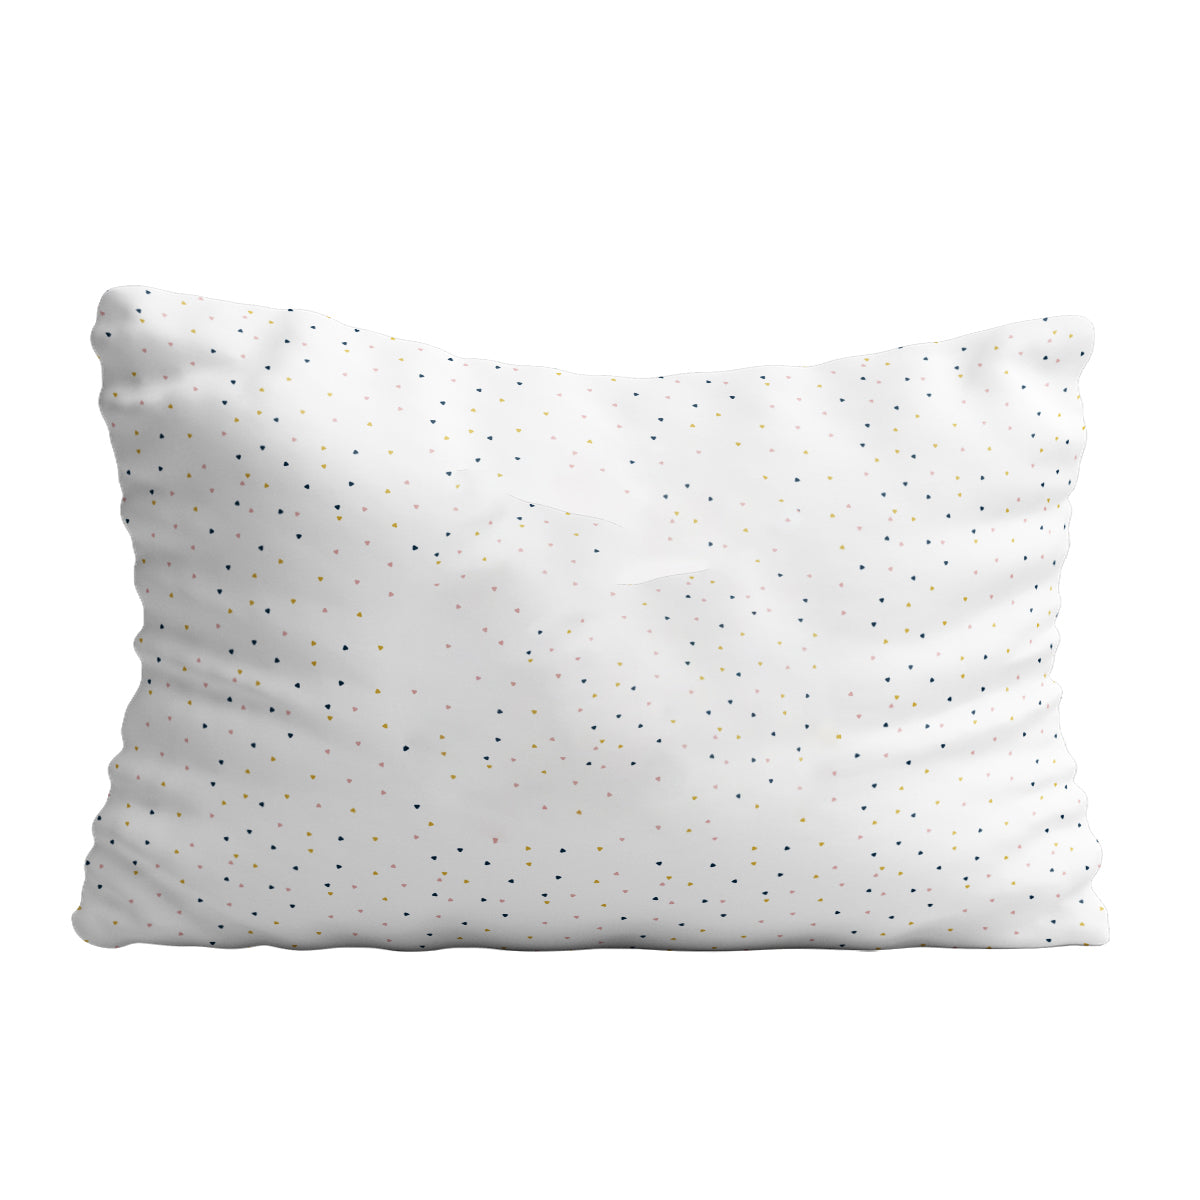 Magic unicorn dreams white pillow case - Wimziy&Co.